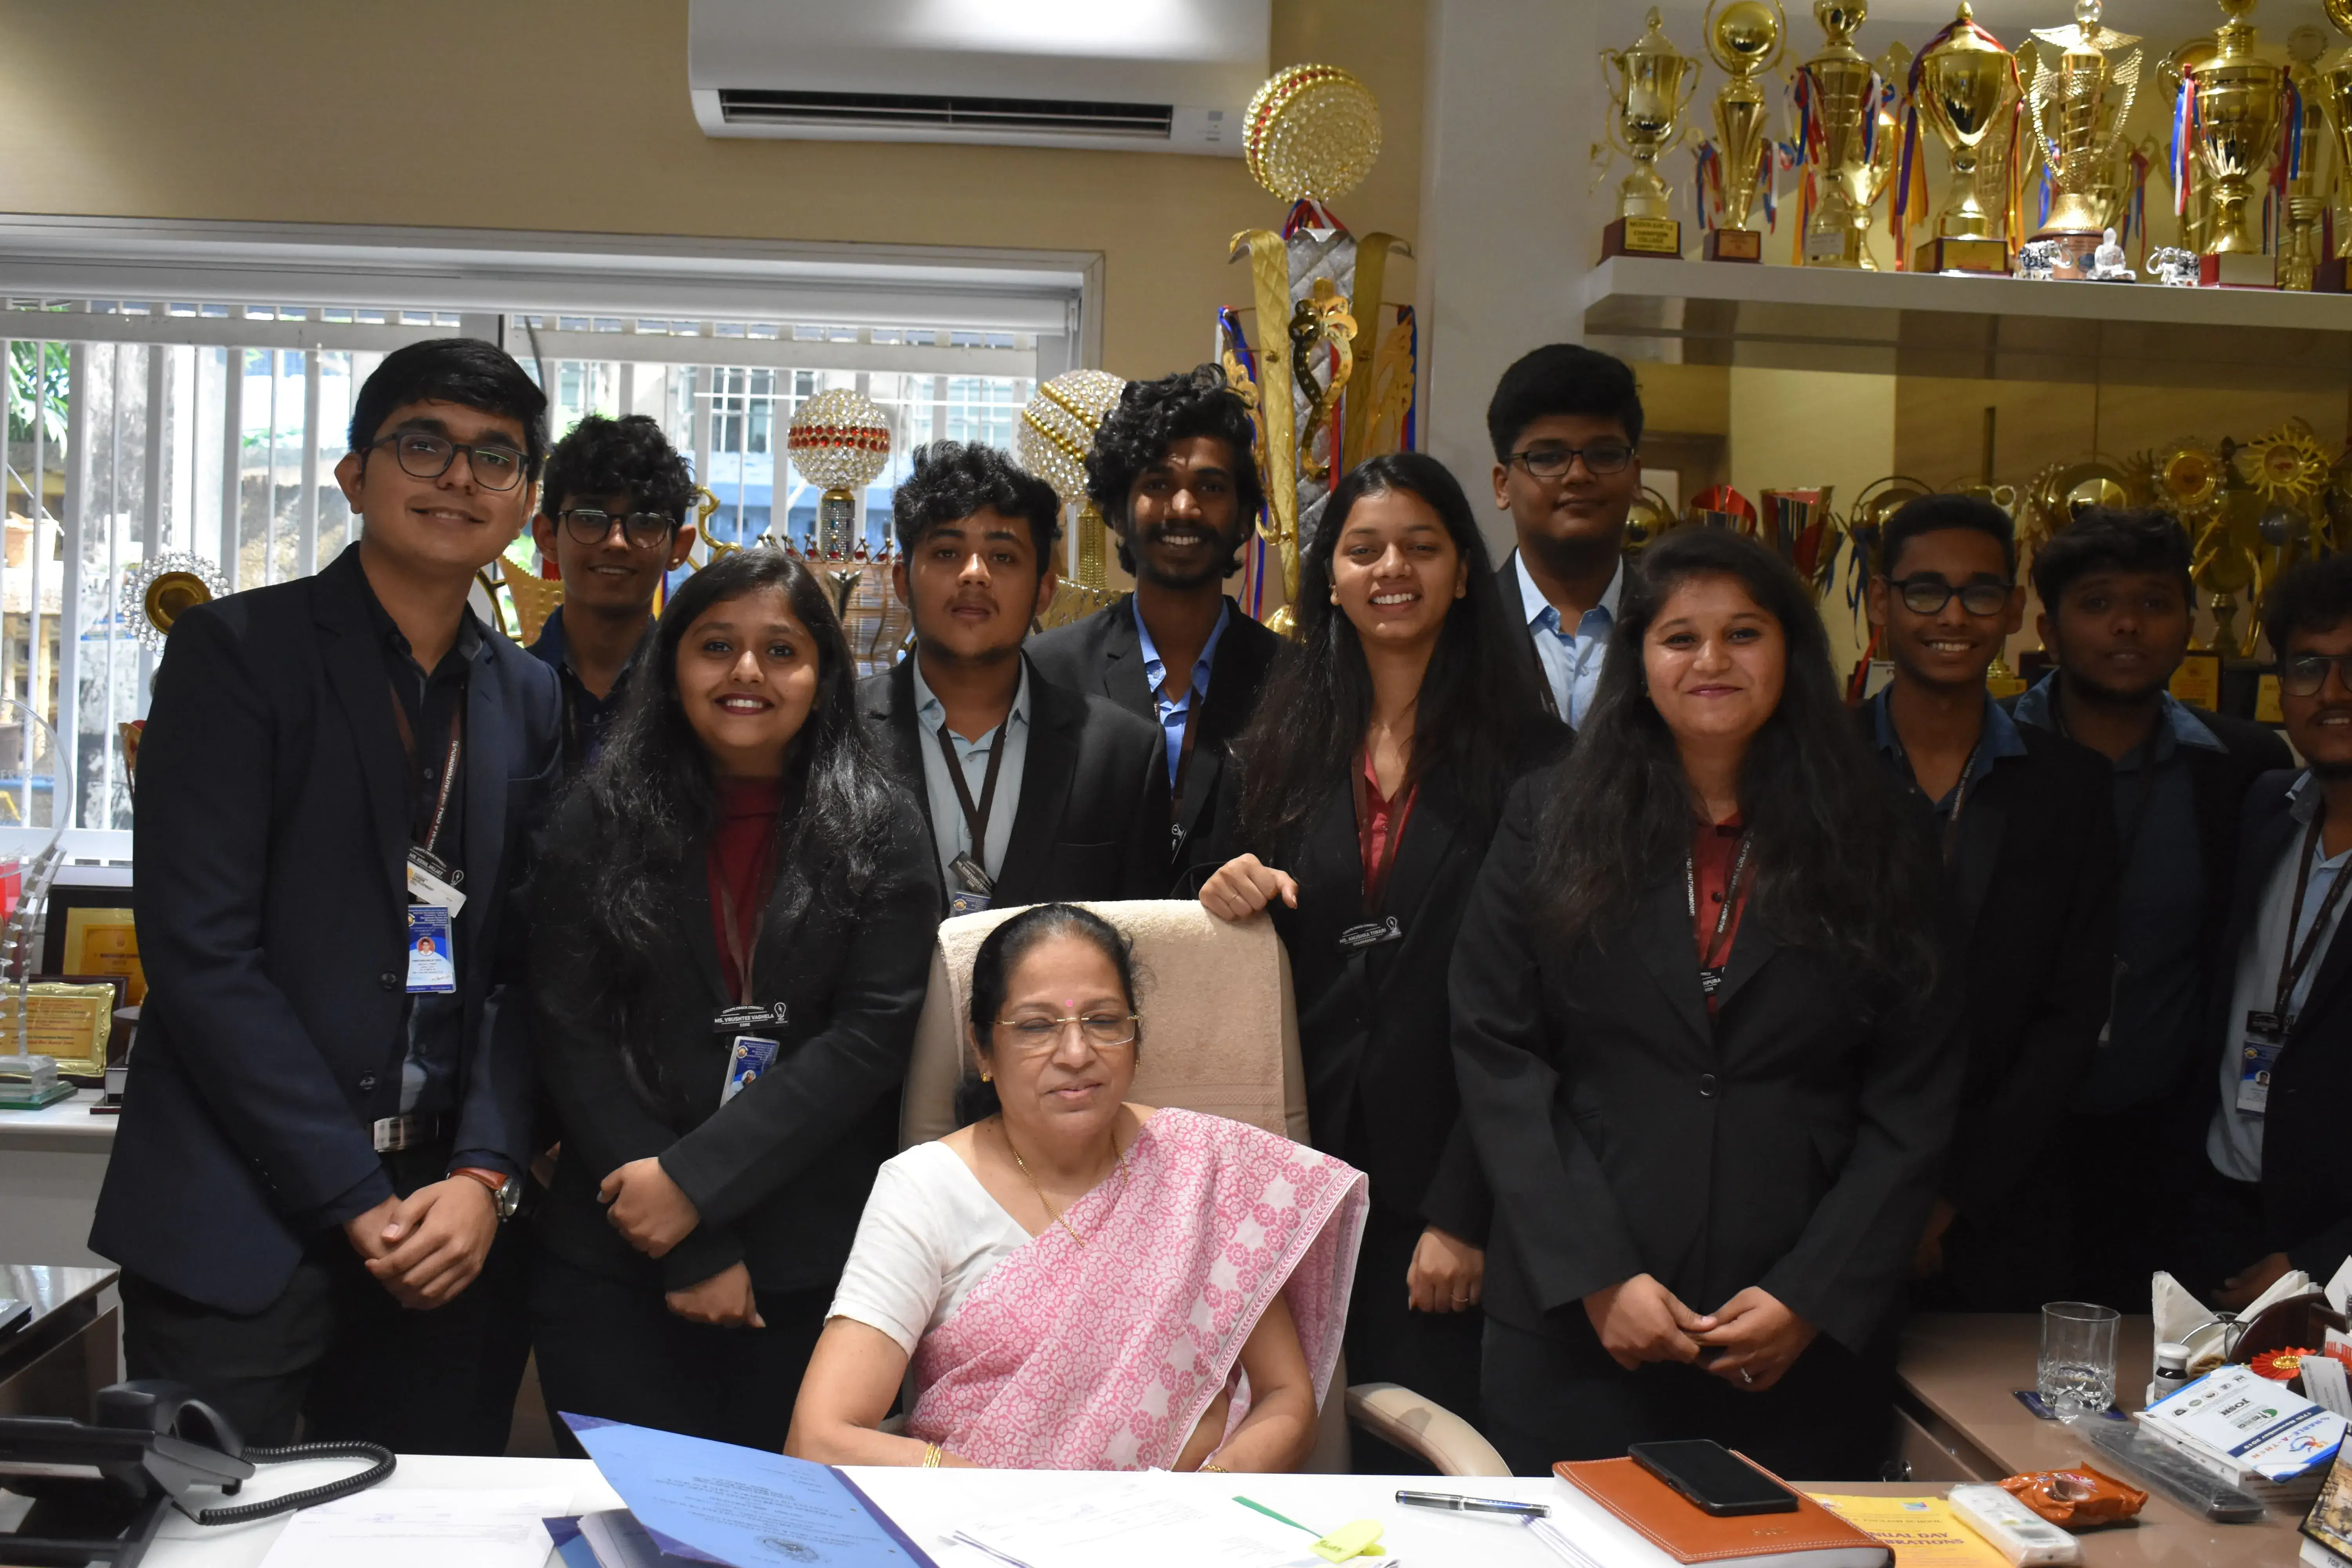 PGDM aspiring students at MKES Business School in Mumbai